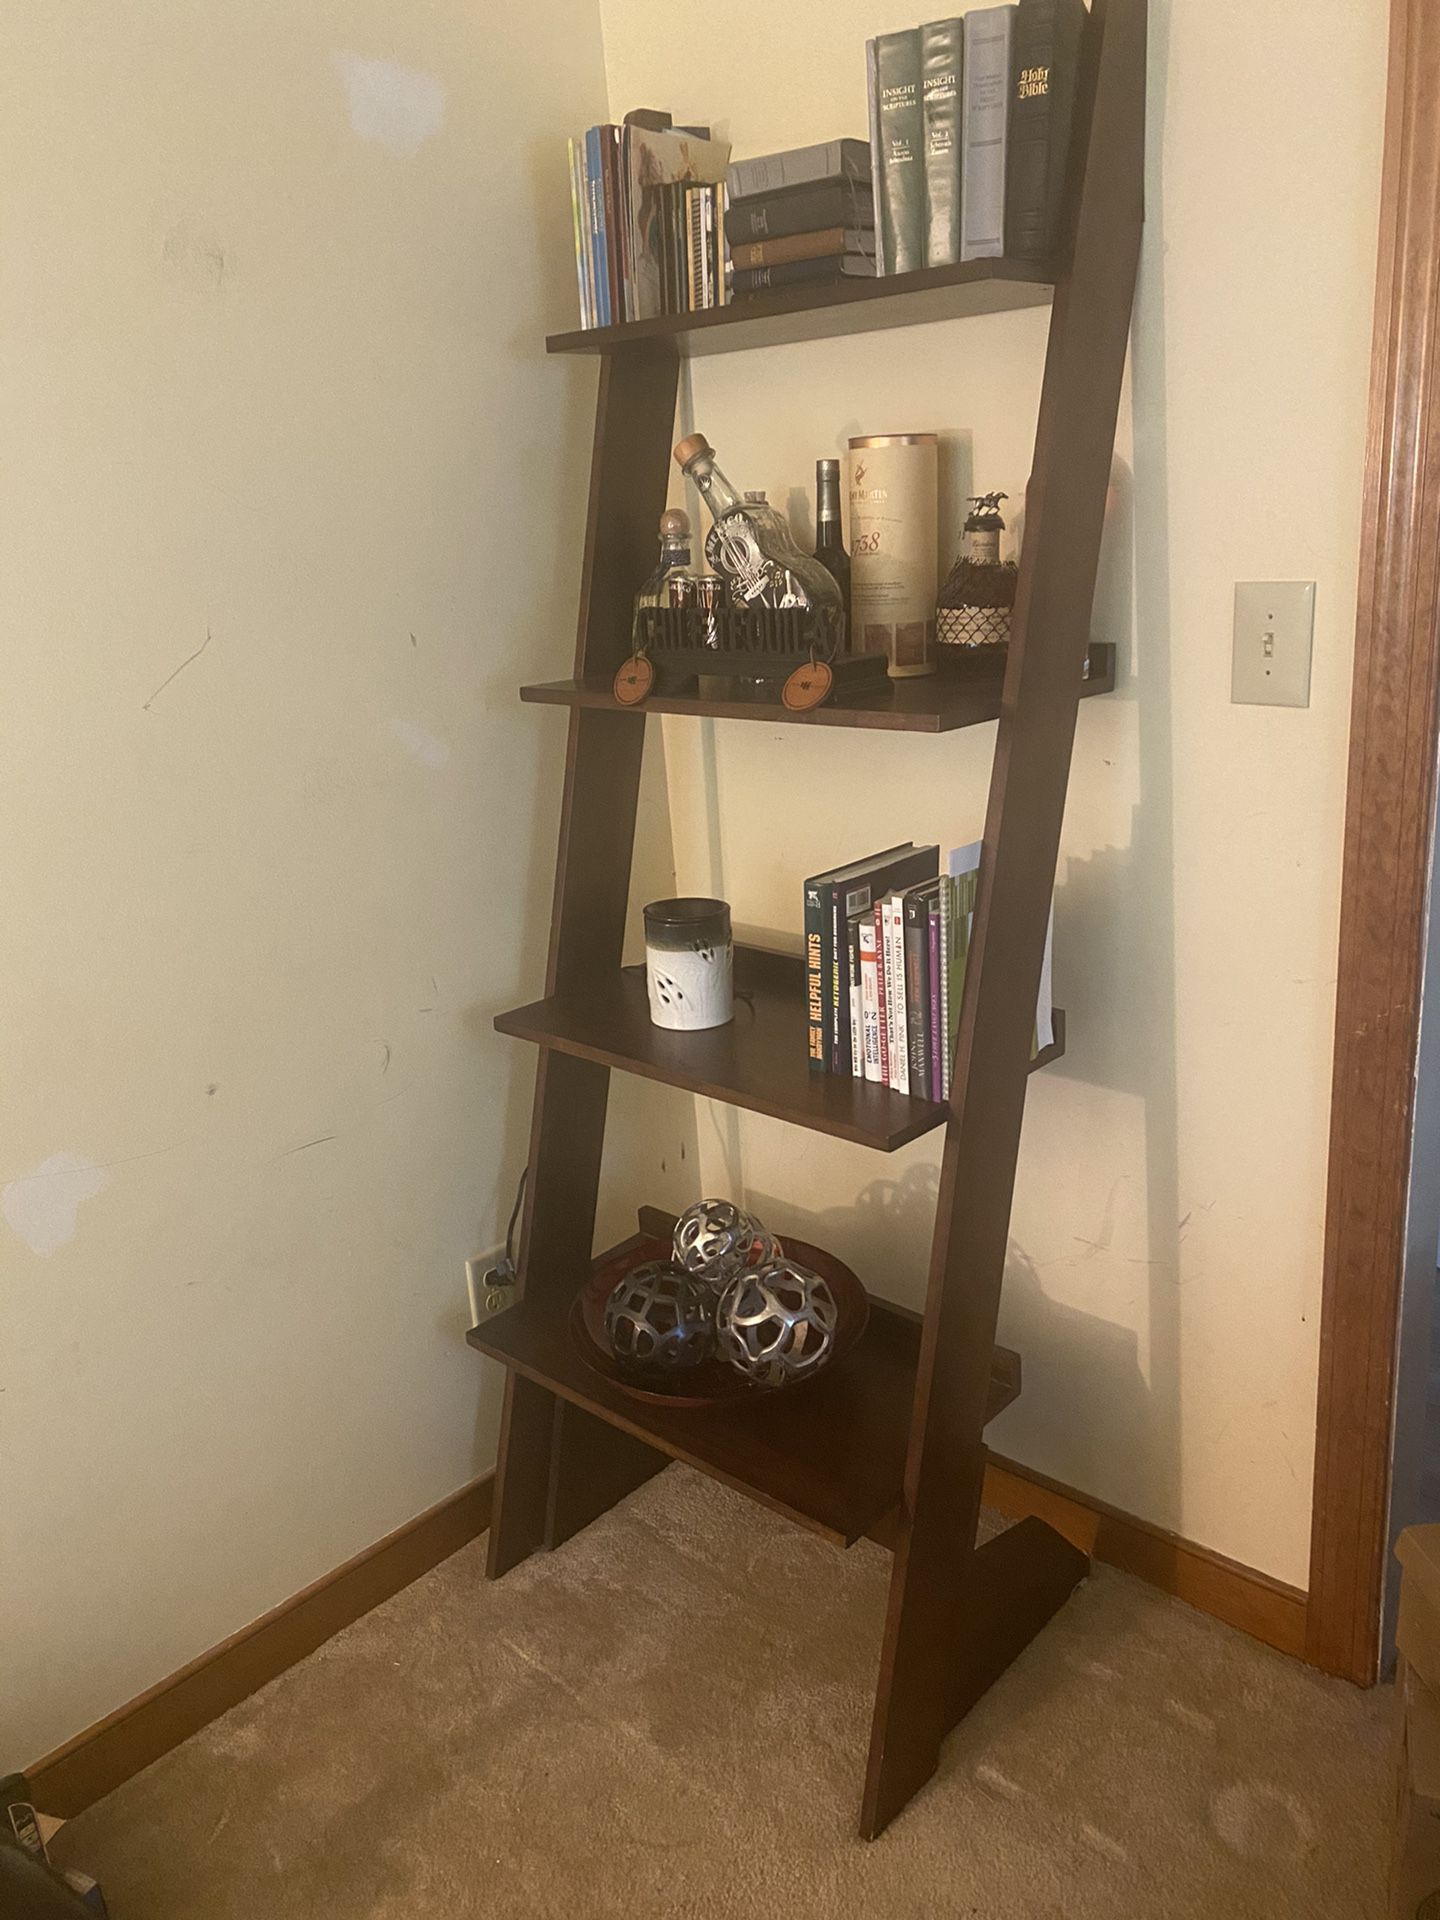 Leaning book shelf